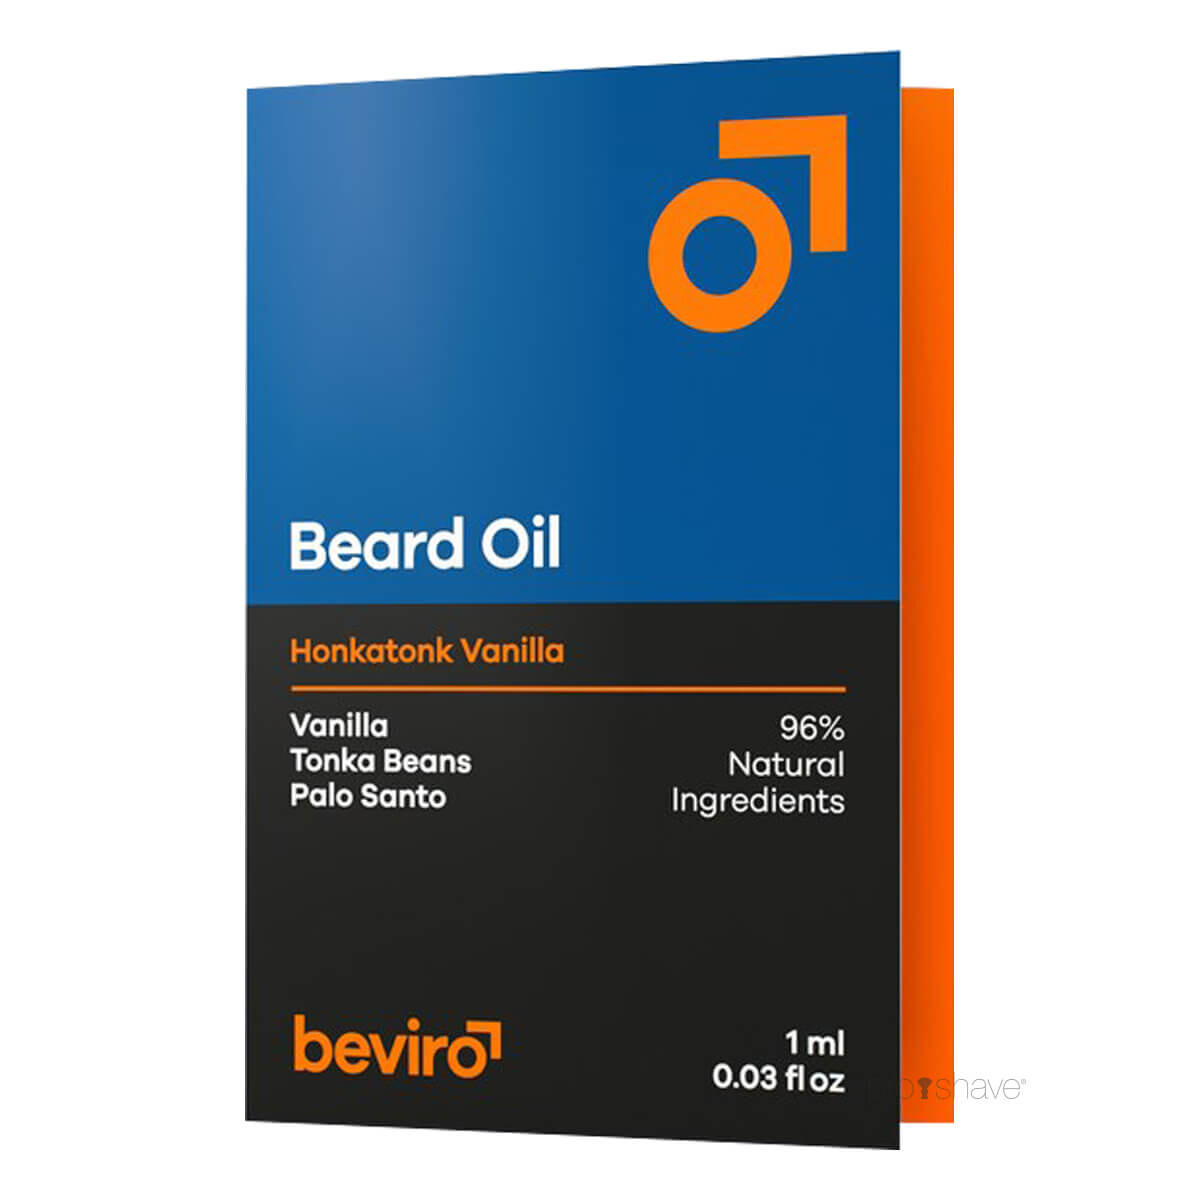 Se Beviro Beard Oil, Honkatonk Vanilla, Sample, 1 ml. hos Proshave